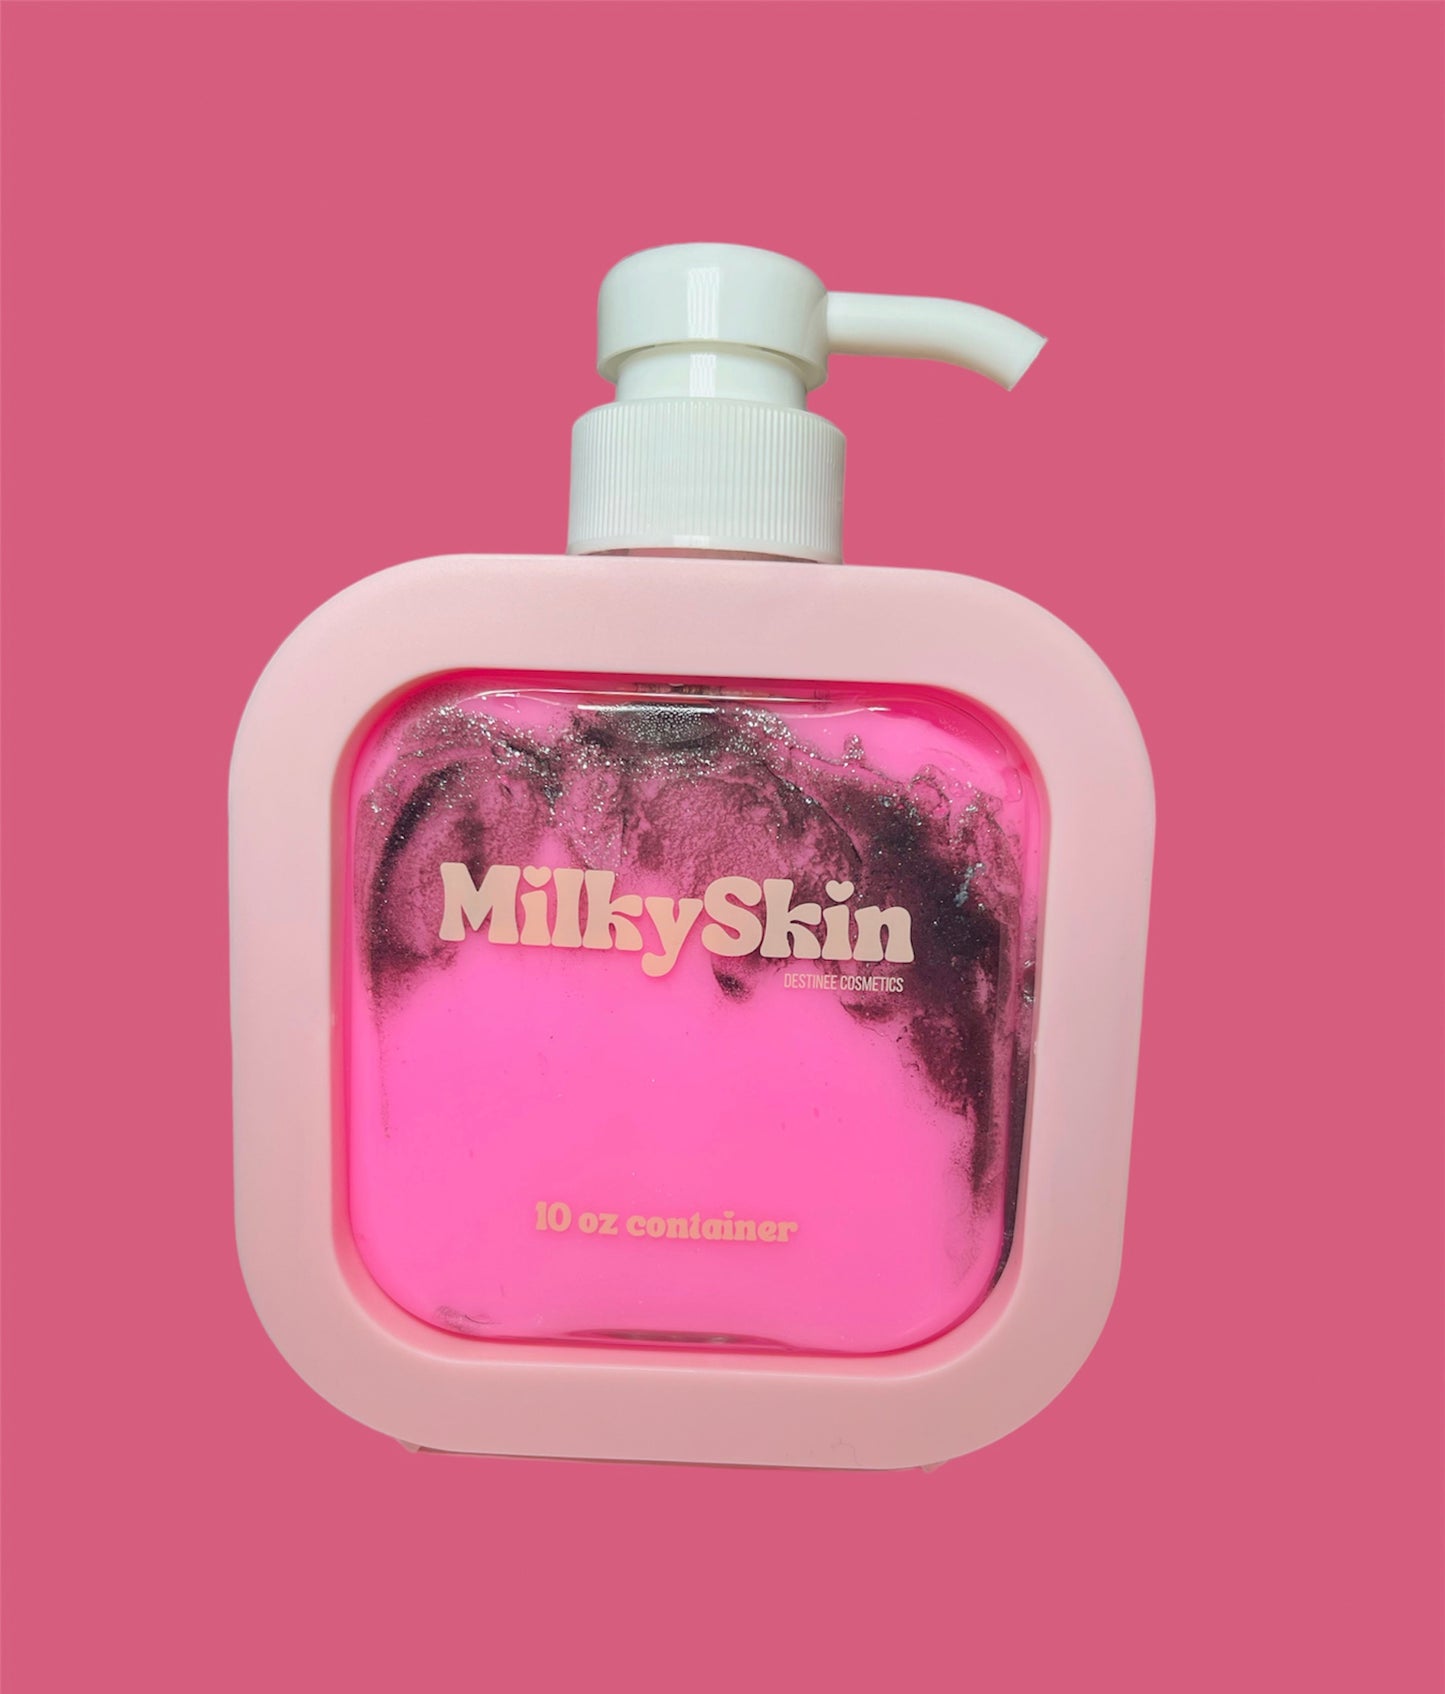 MilkySkin | pink Friday | mystery